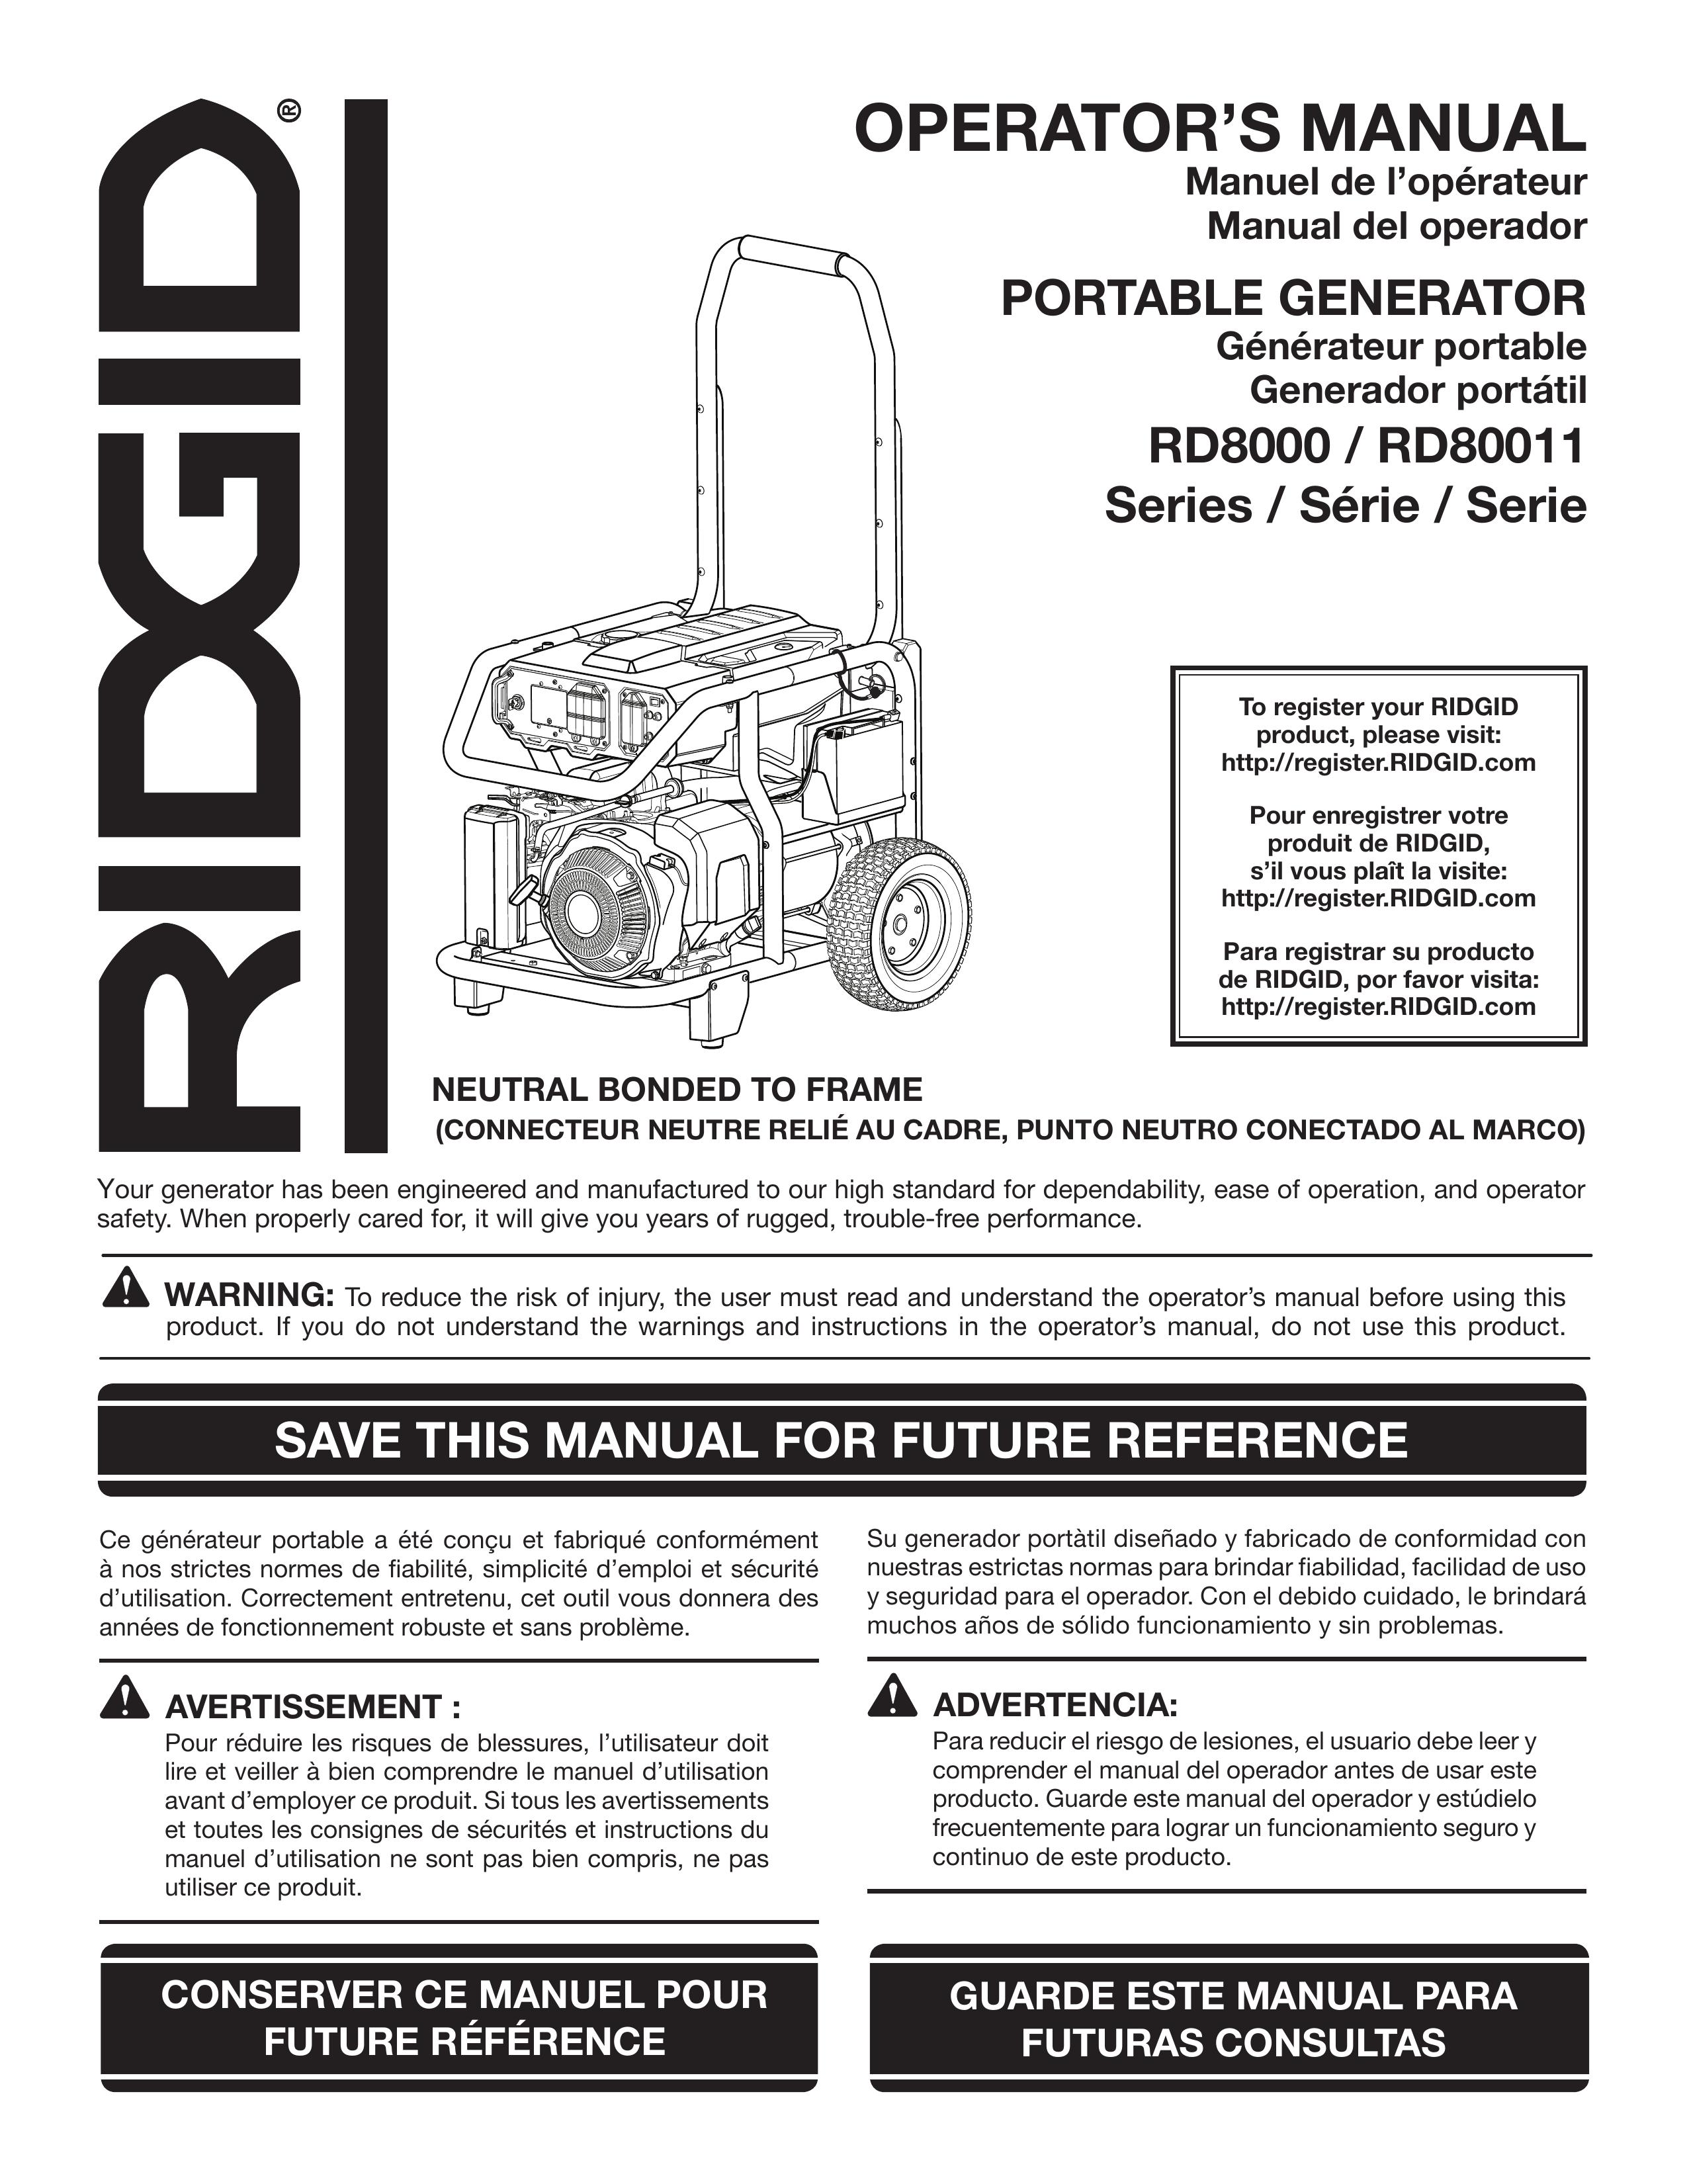 RIDGID RD80011 Portable Generator User Manual